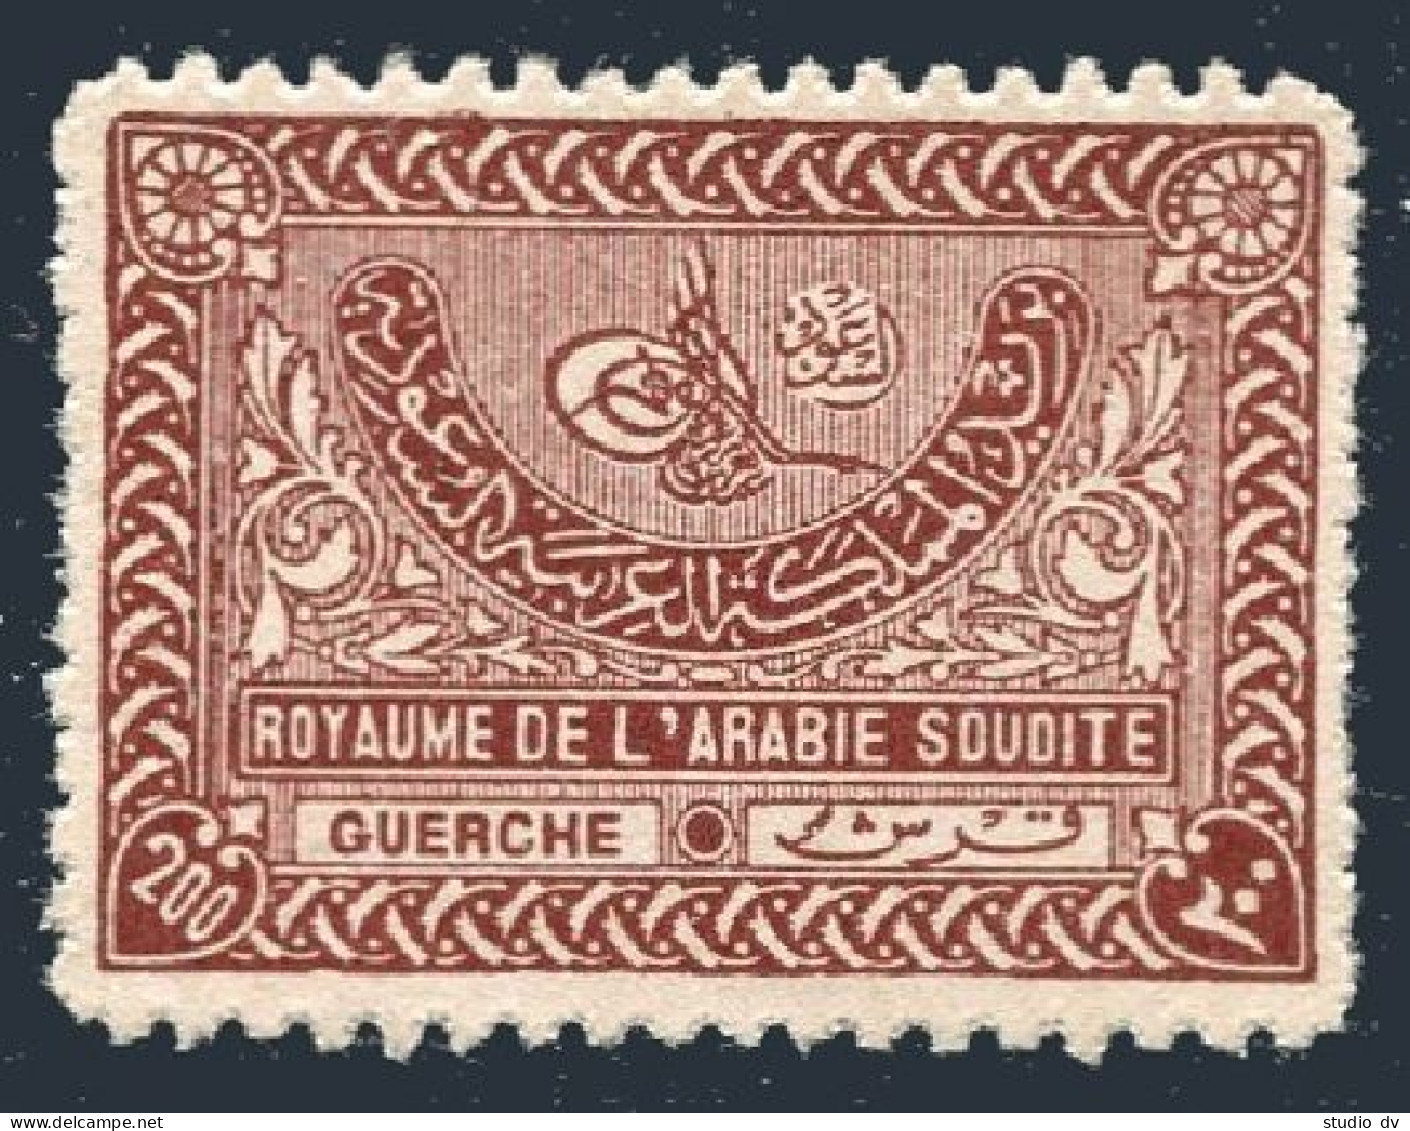 Saudi Arabia 172,MNH.Michel 23. Tughra Of King Abdul Aziz,1934. - Saoedi-Arabië